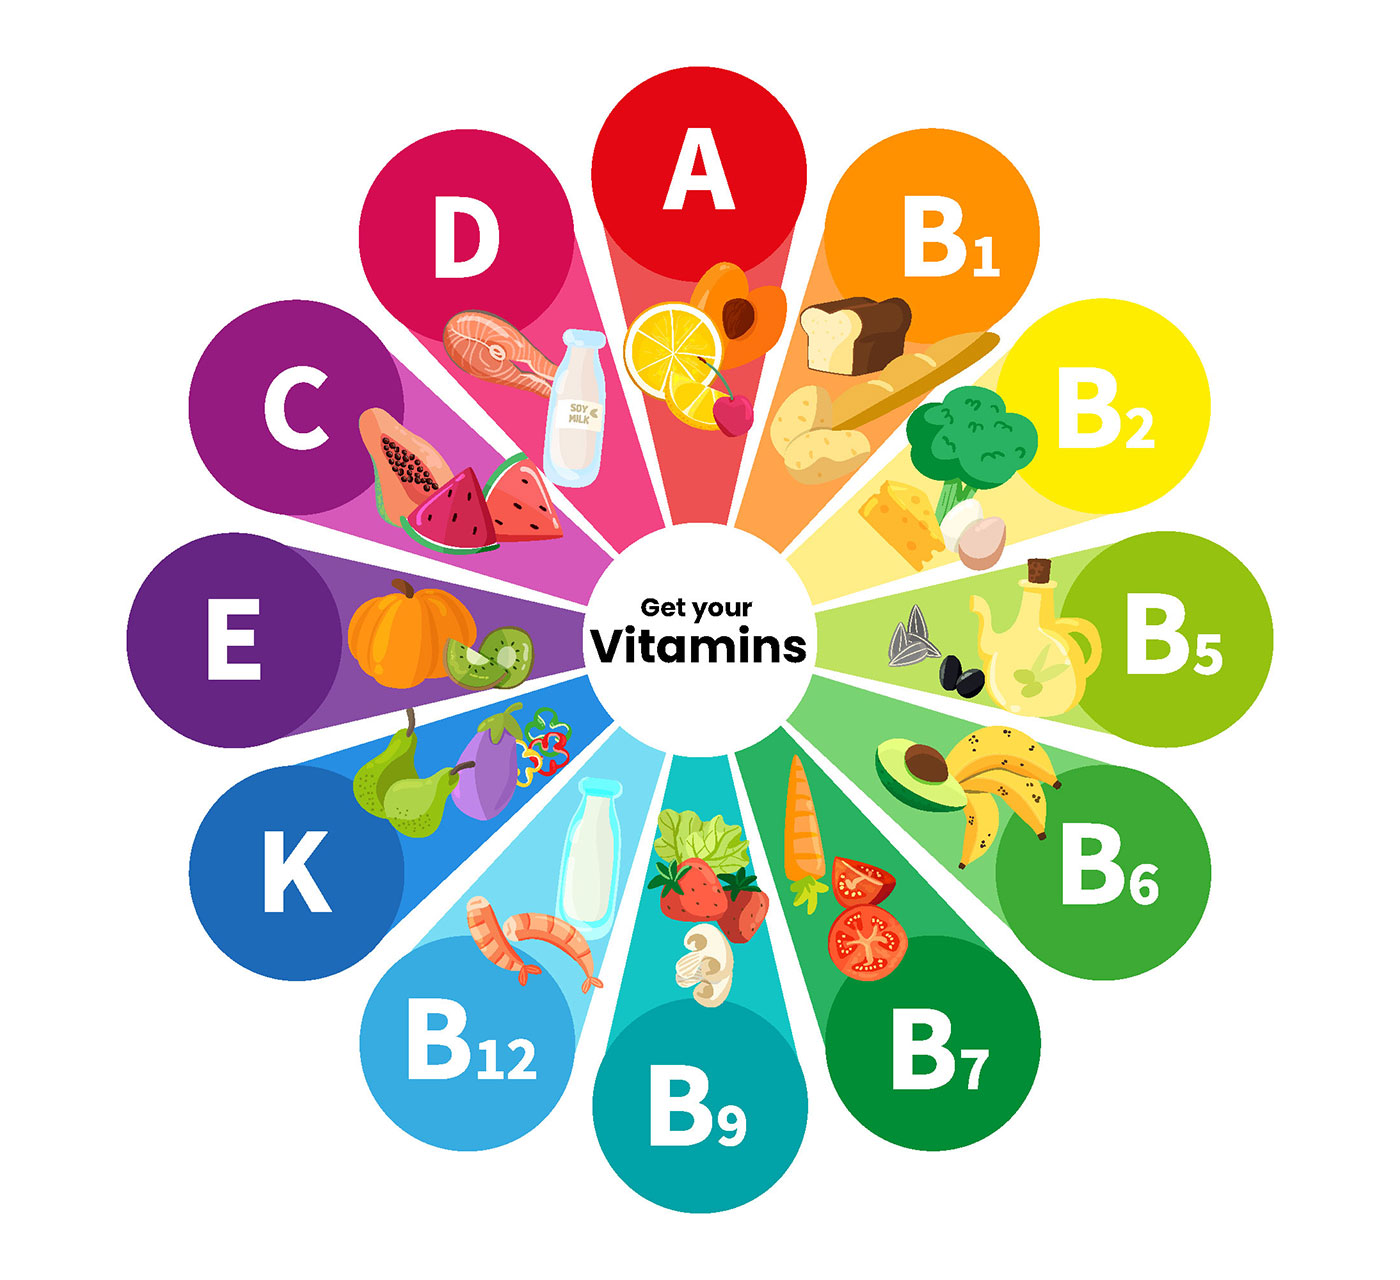 11 Essential Vitamins That Aid Healthy Digestion